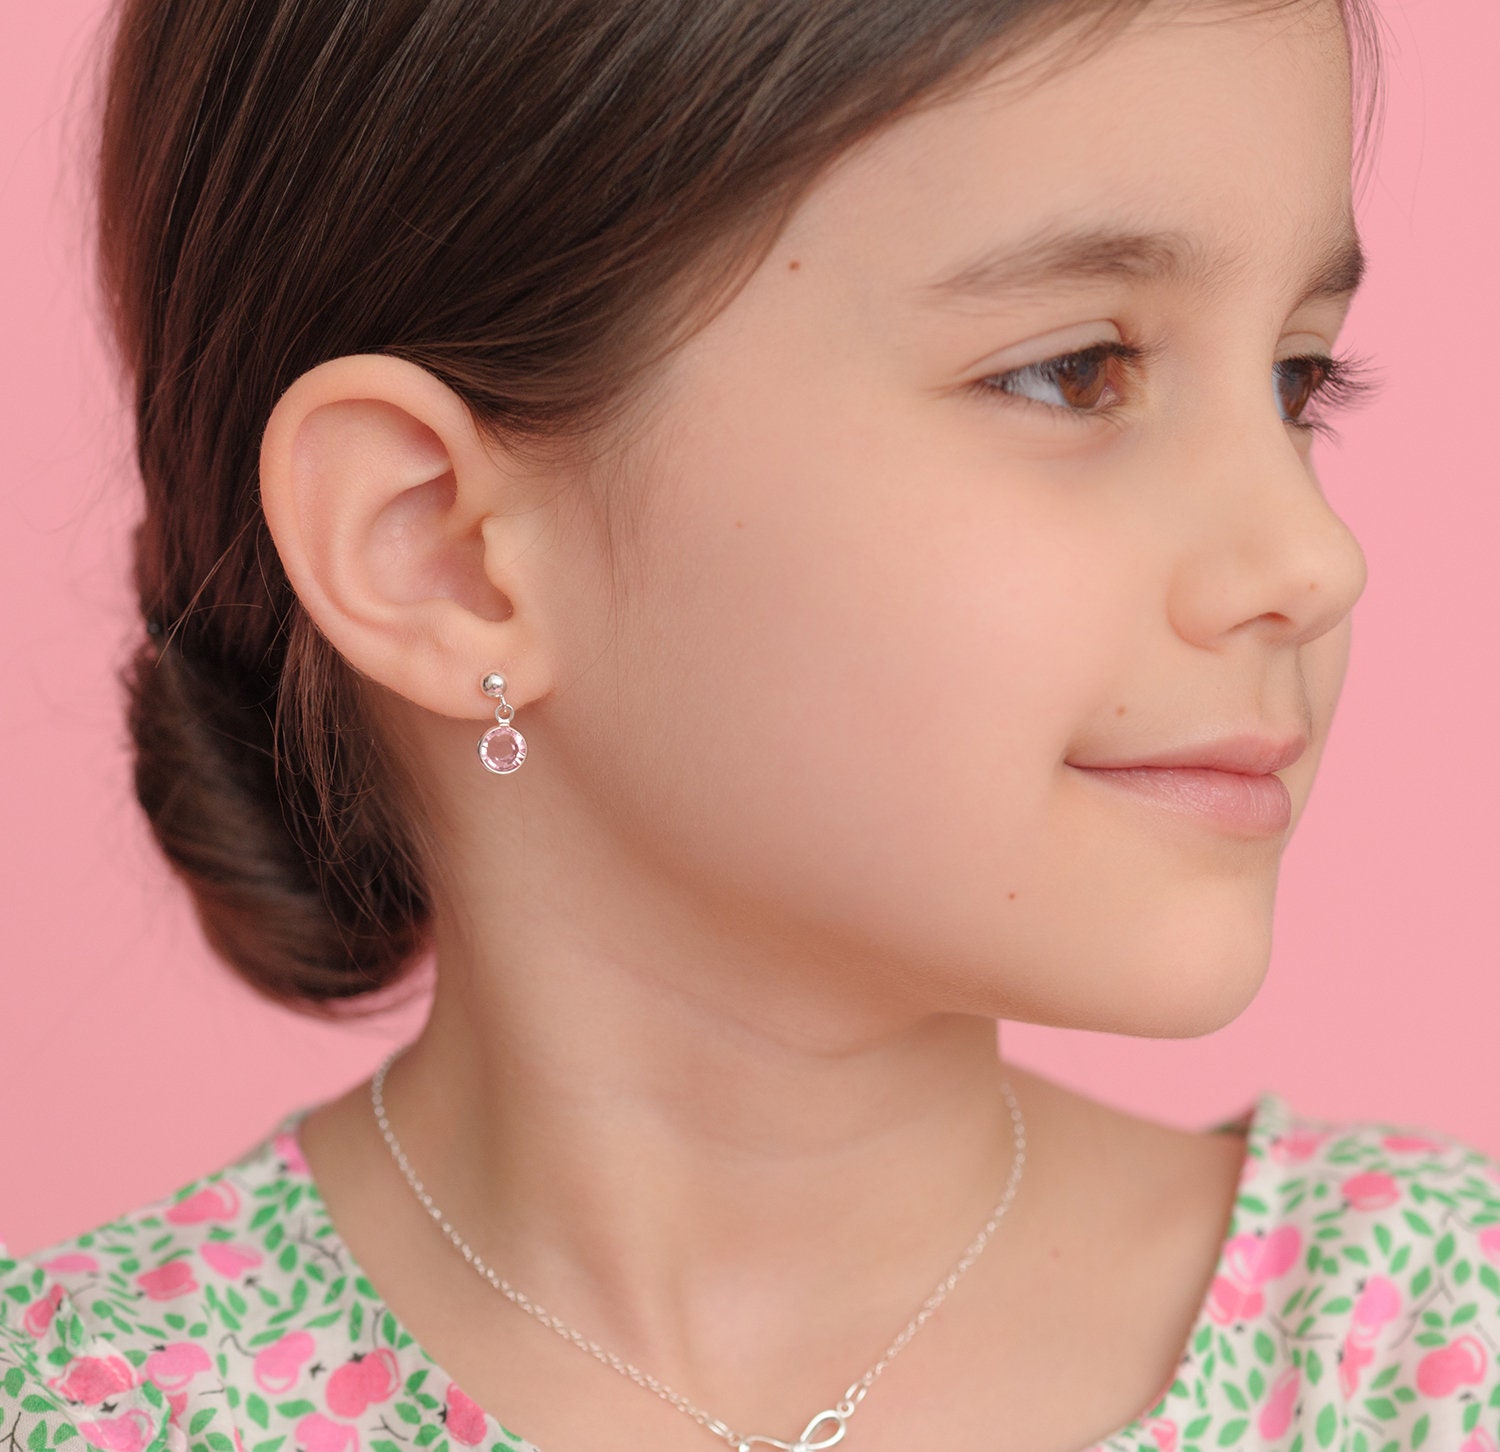 December Birthstone Earrings Sterling Silver Post Flower Girl Jewelry Gift  for Daughter Blue Teal Wedding Gifts for Flower Girls 